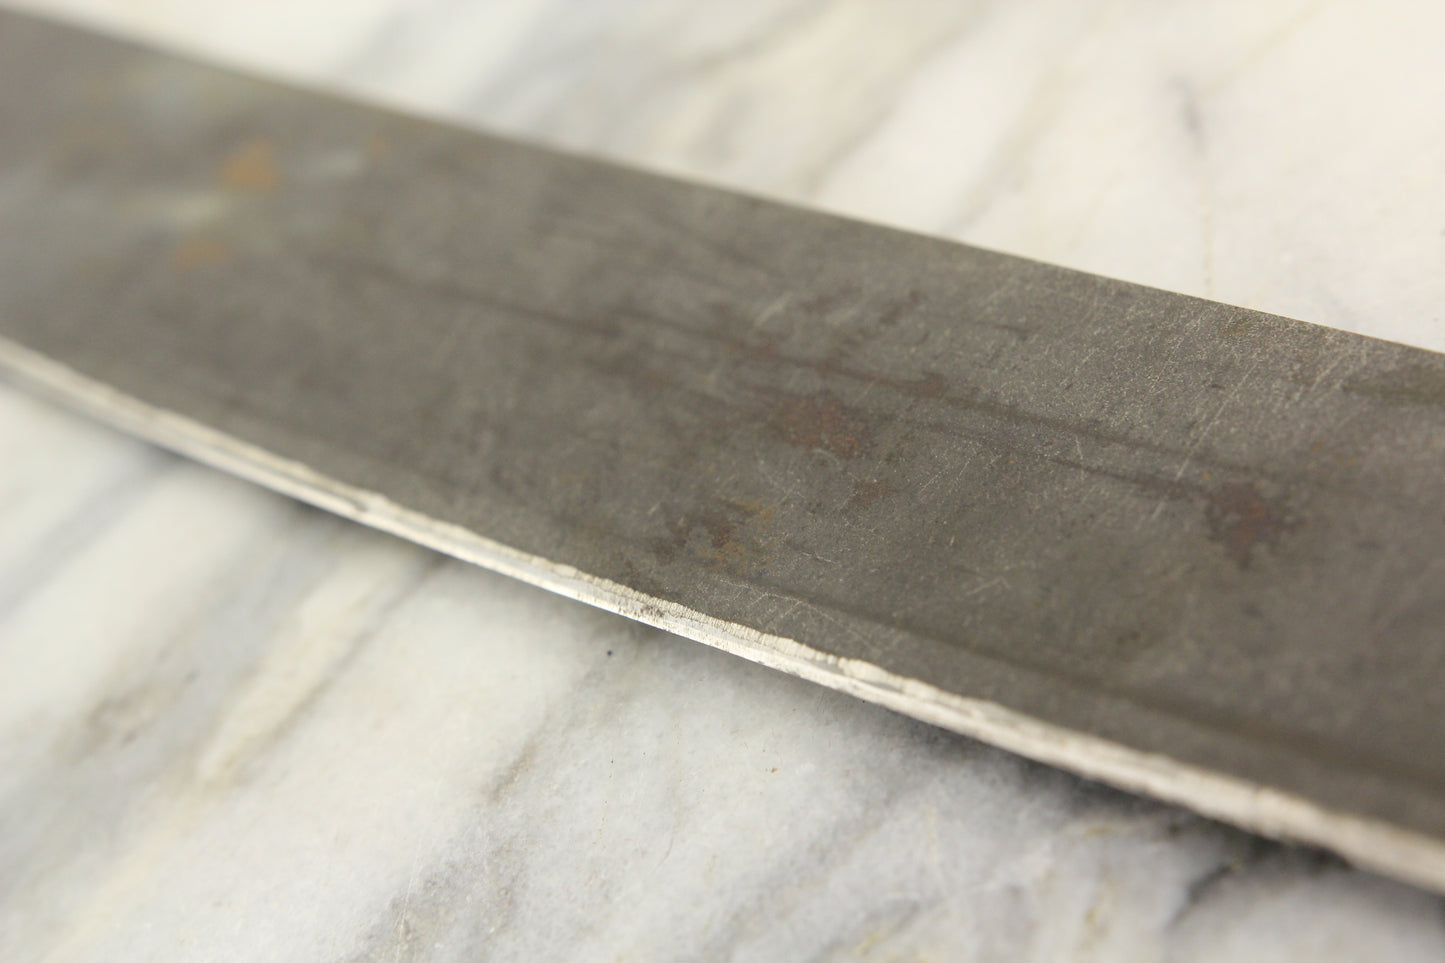 Collins & Co. Legitimus No. 323 Machete Short Sword with Sheath, Made in USA